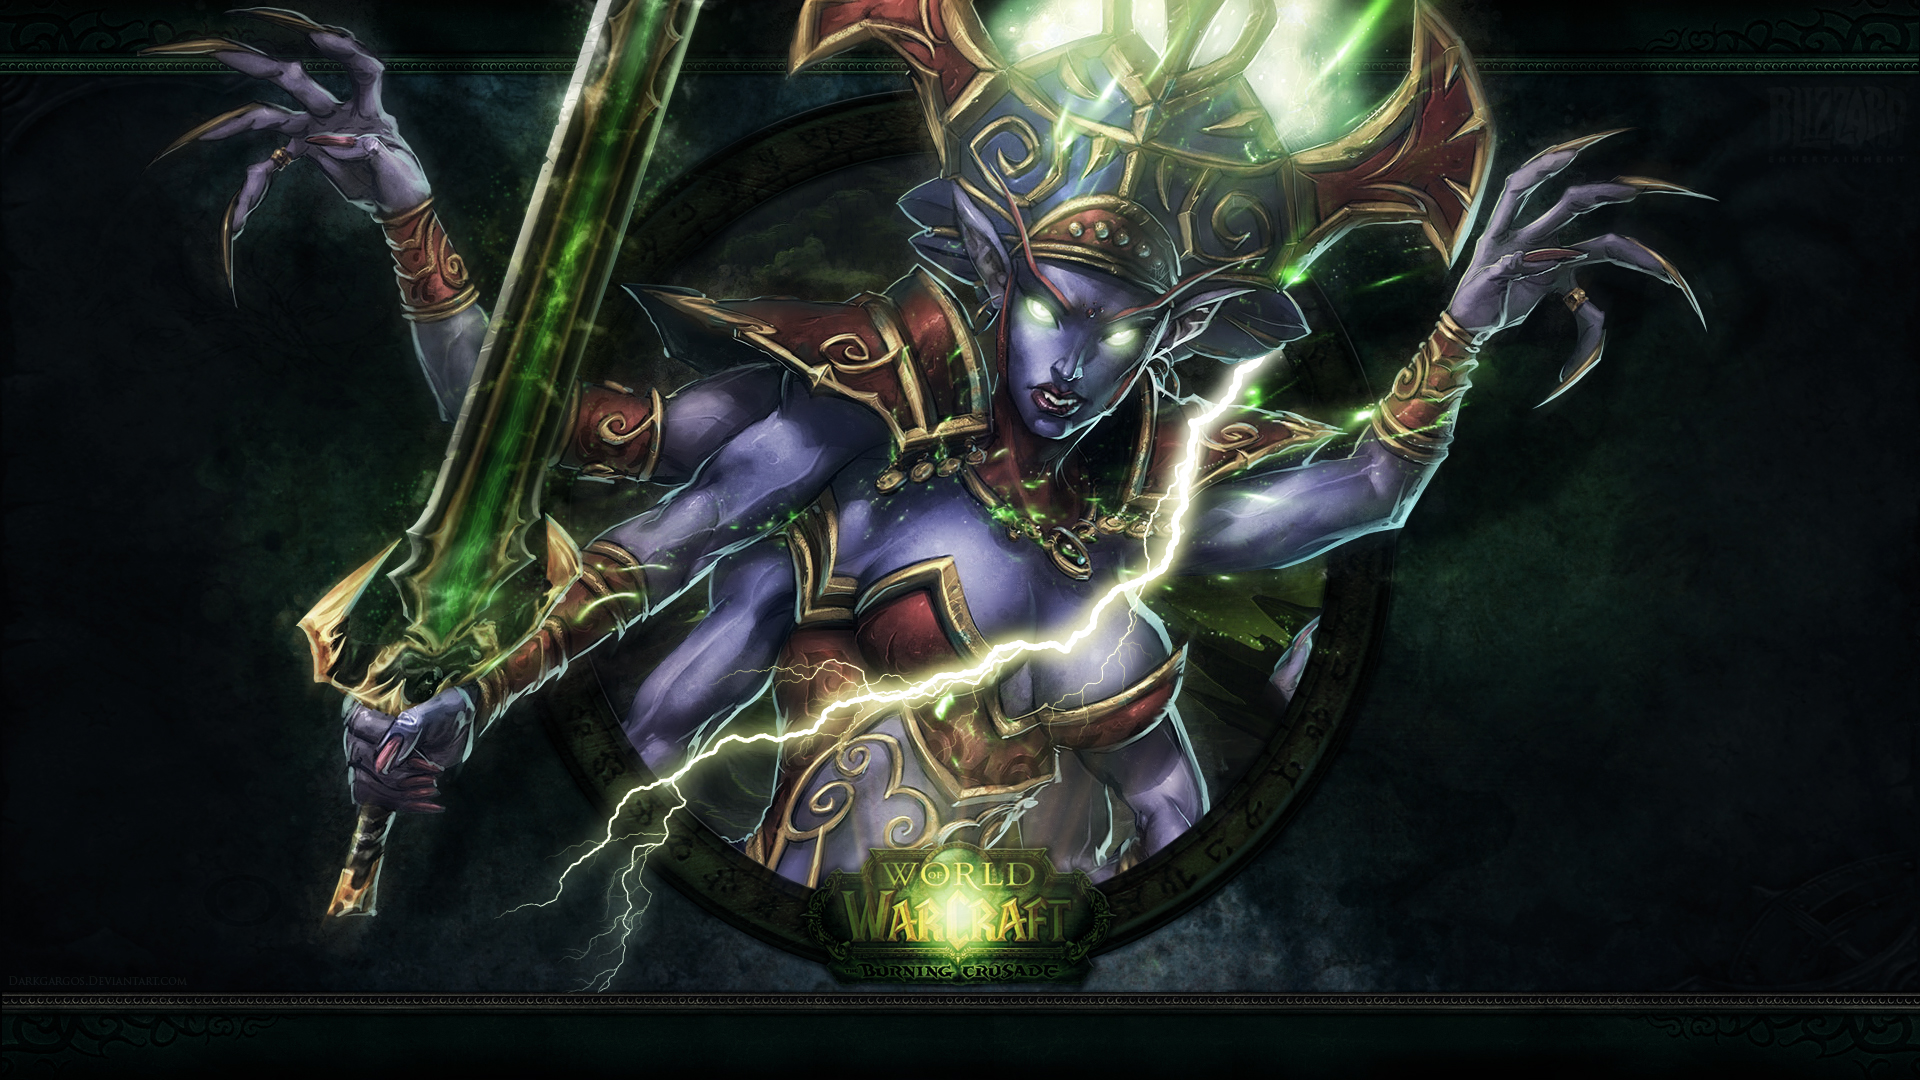 Video Game World Of Warcraft: The Burning Crusade HD Wallpaper | Background Image